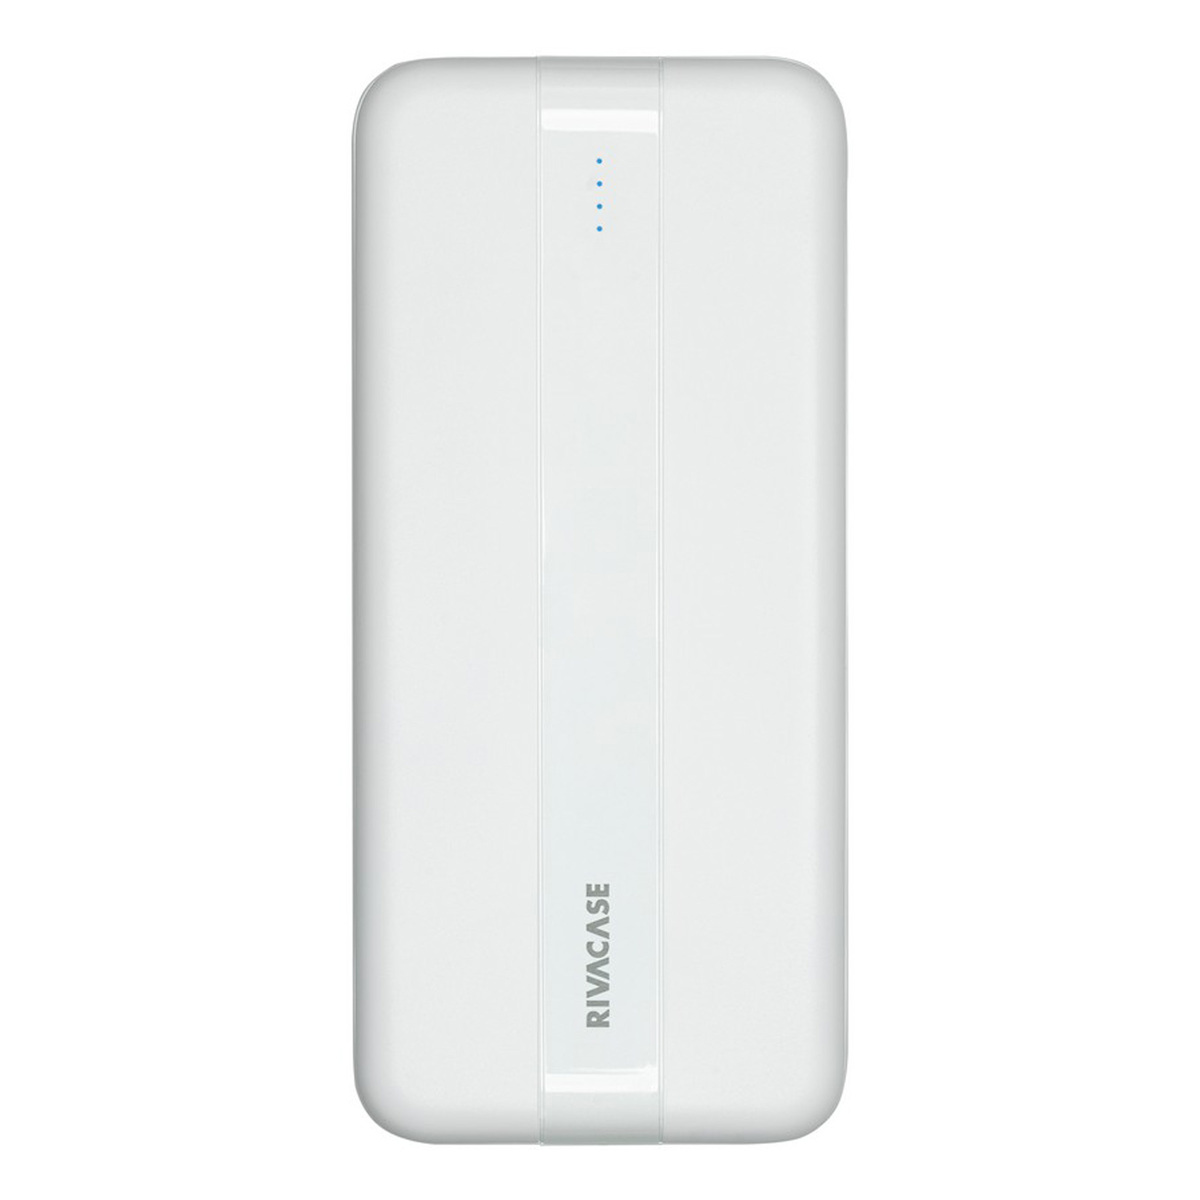 Rivacase 10000 mAh Type C Portable Power Bank, White, VA2041